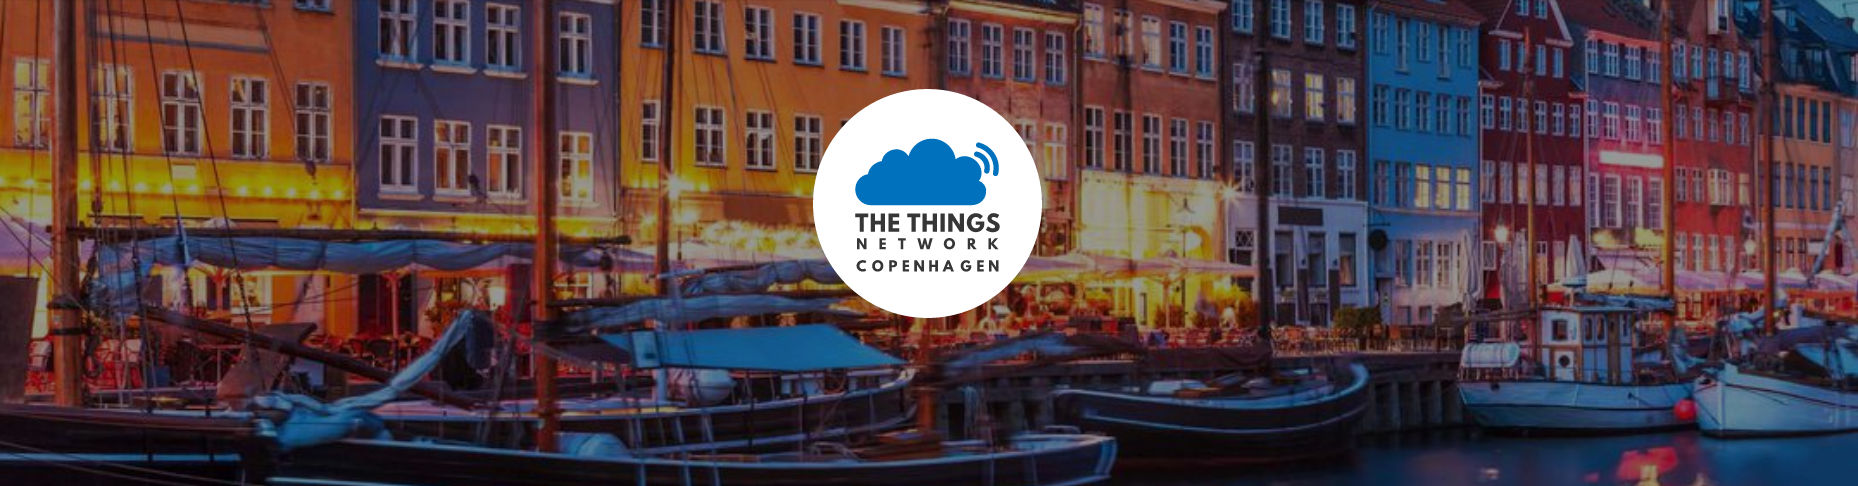 The Things Network Copenhagen - 1st Hackathon, June 1 ...